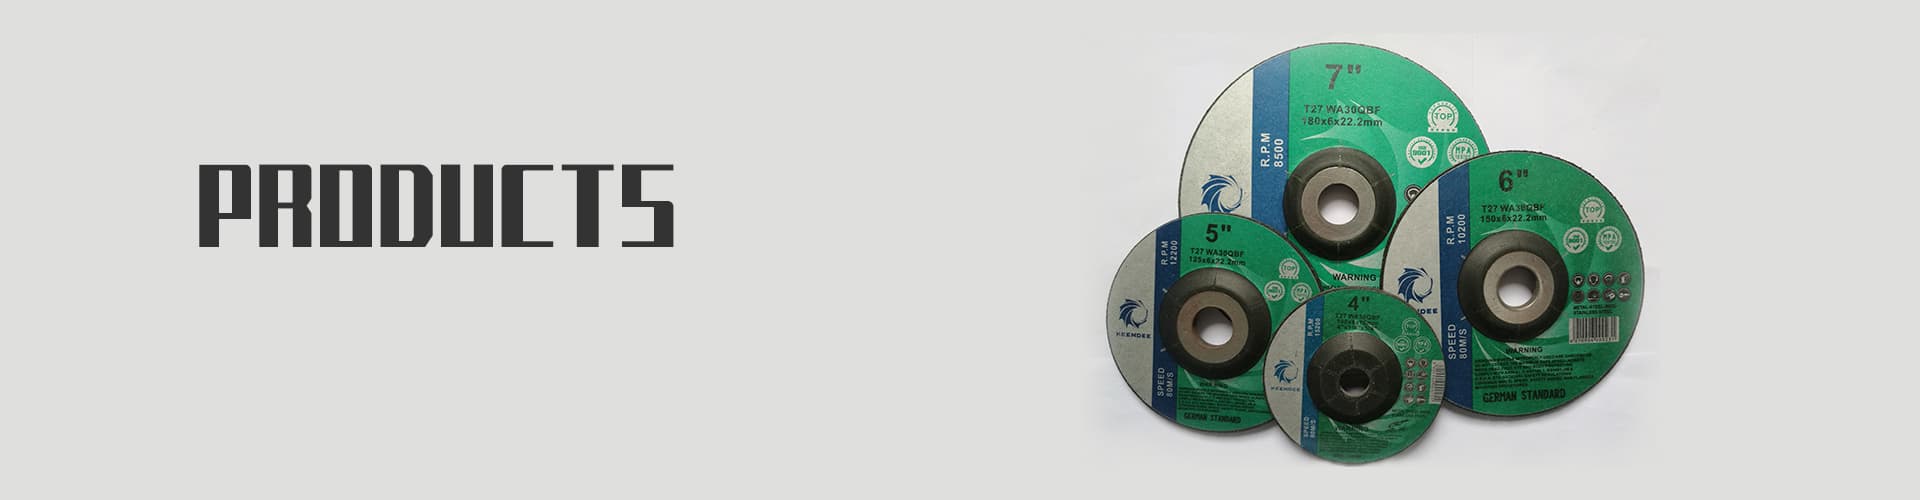 Cutting Discs Archives - Abrasives,Cutting Wheel,Abrasive Wheel